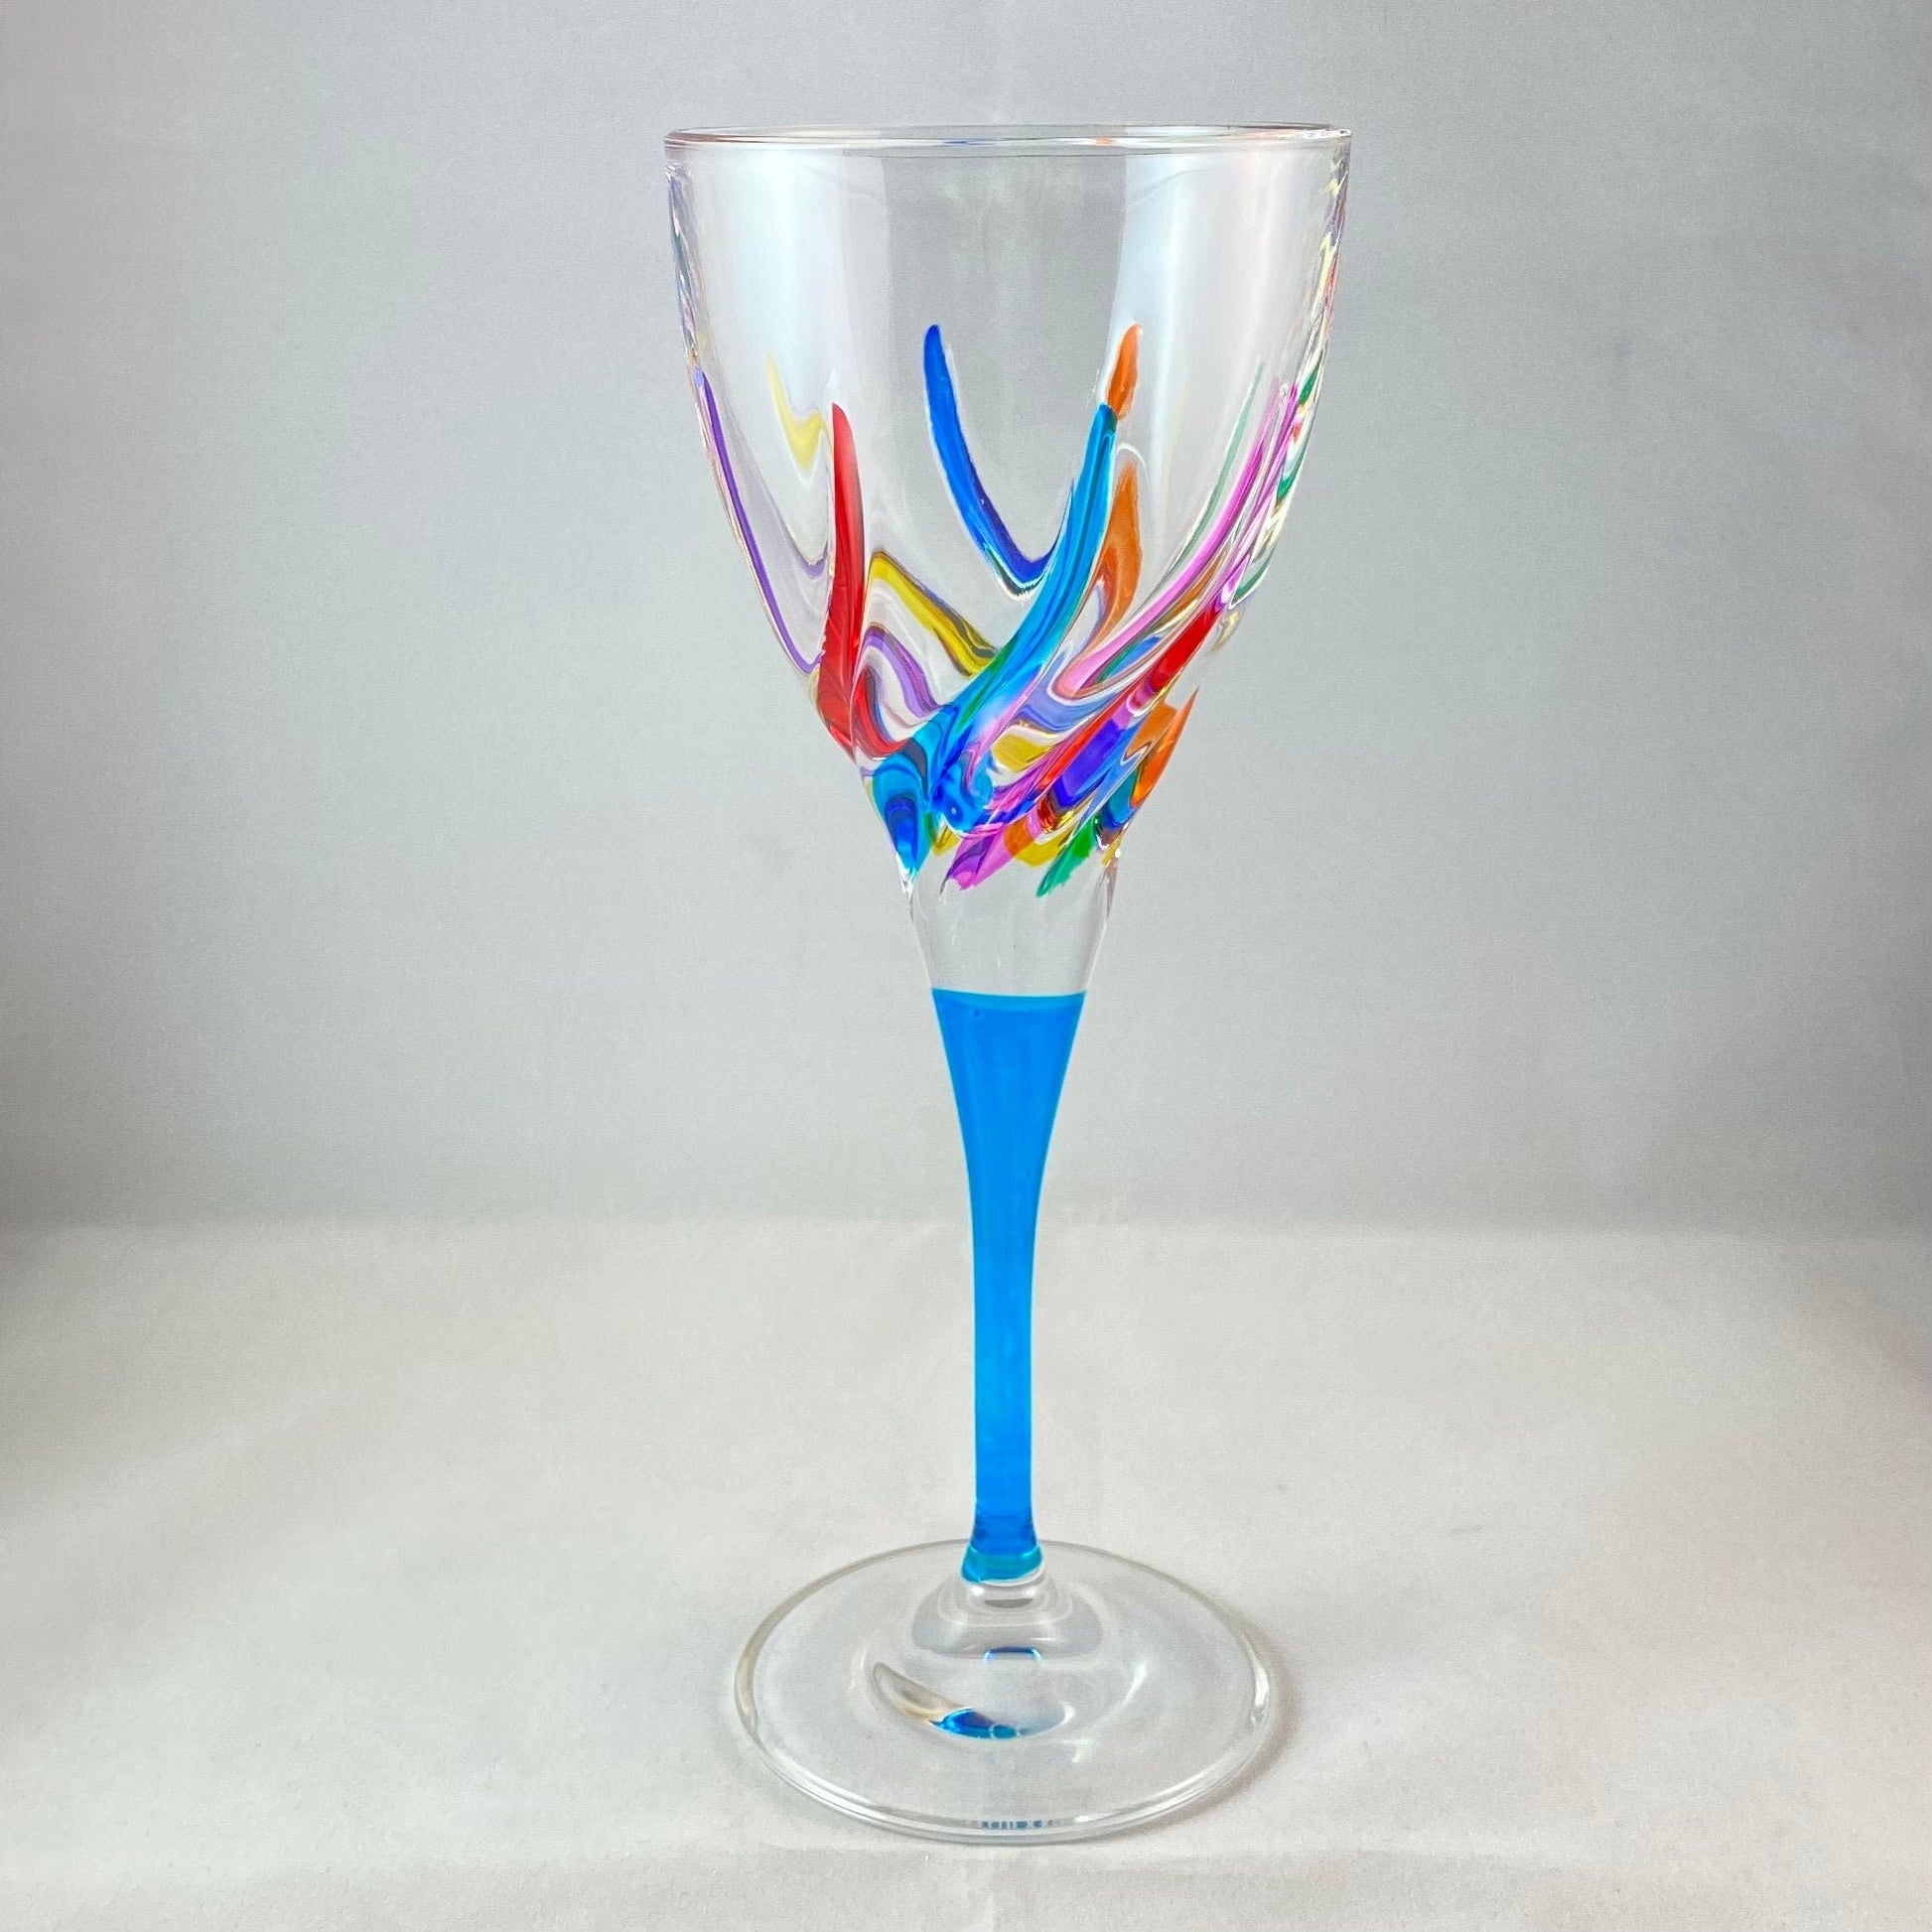 Aqua Blue Stem Venetian Glass Wine Glass - Handmade in Italy, Colorful Murano Glass